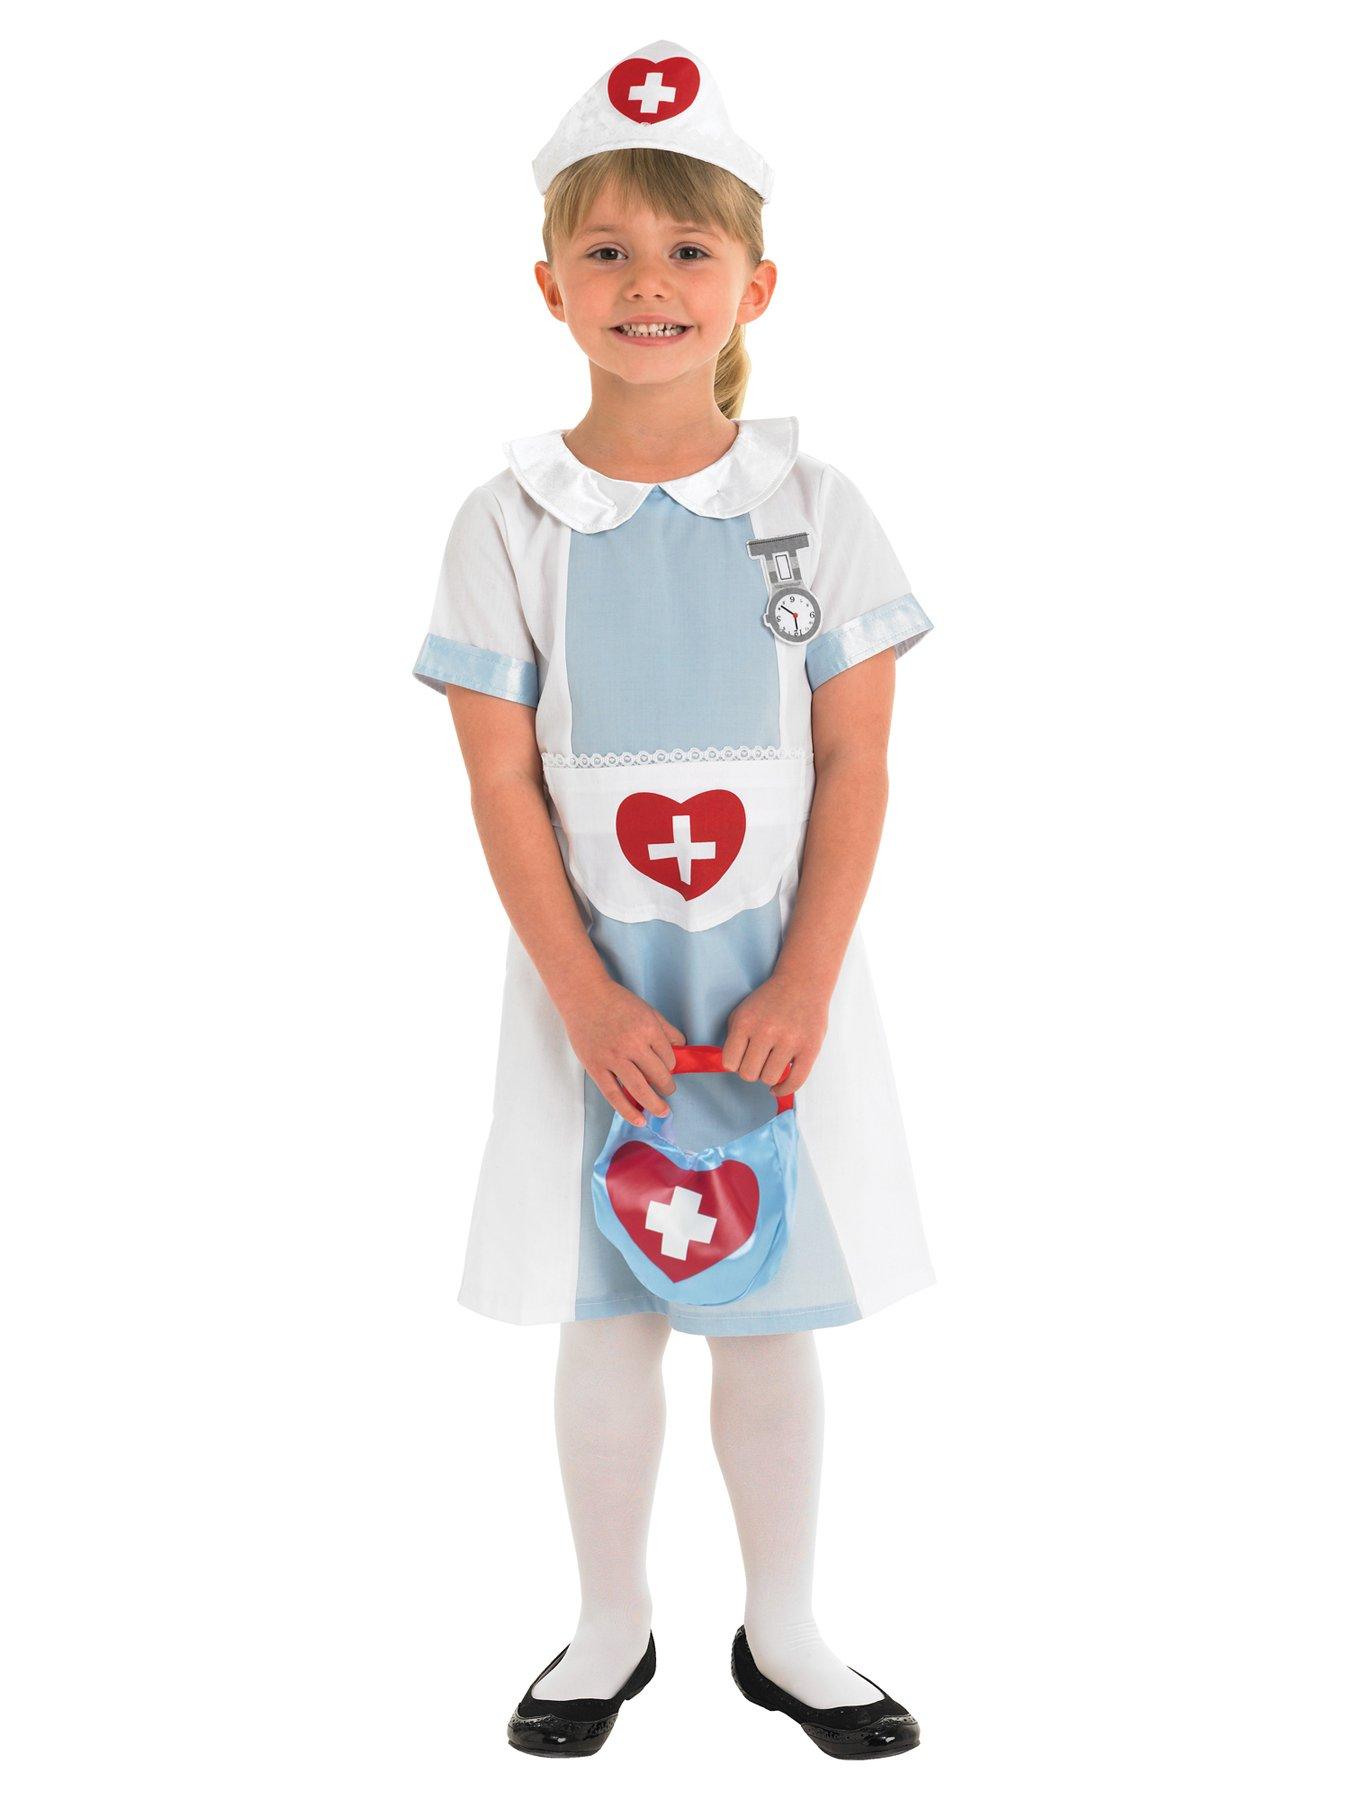 Children's Nurse Costume